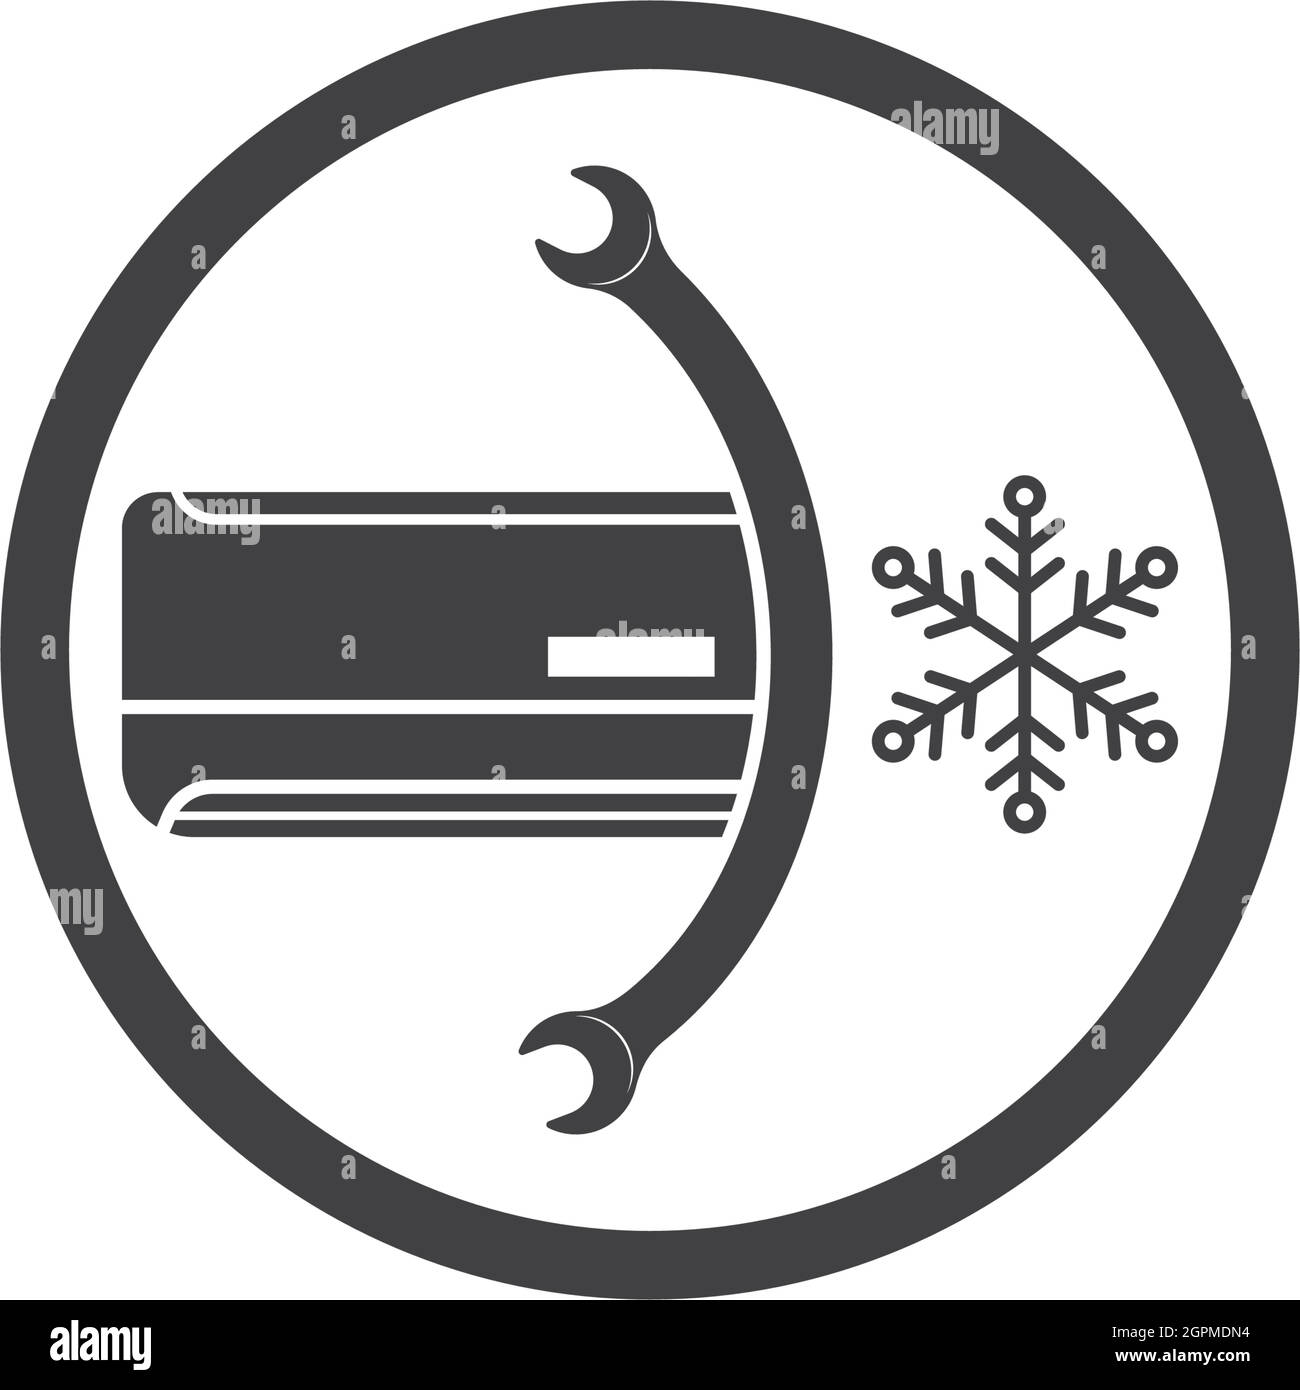 airconditioner repair and service vector icon illustration design Stock Vector